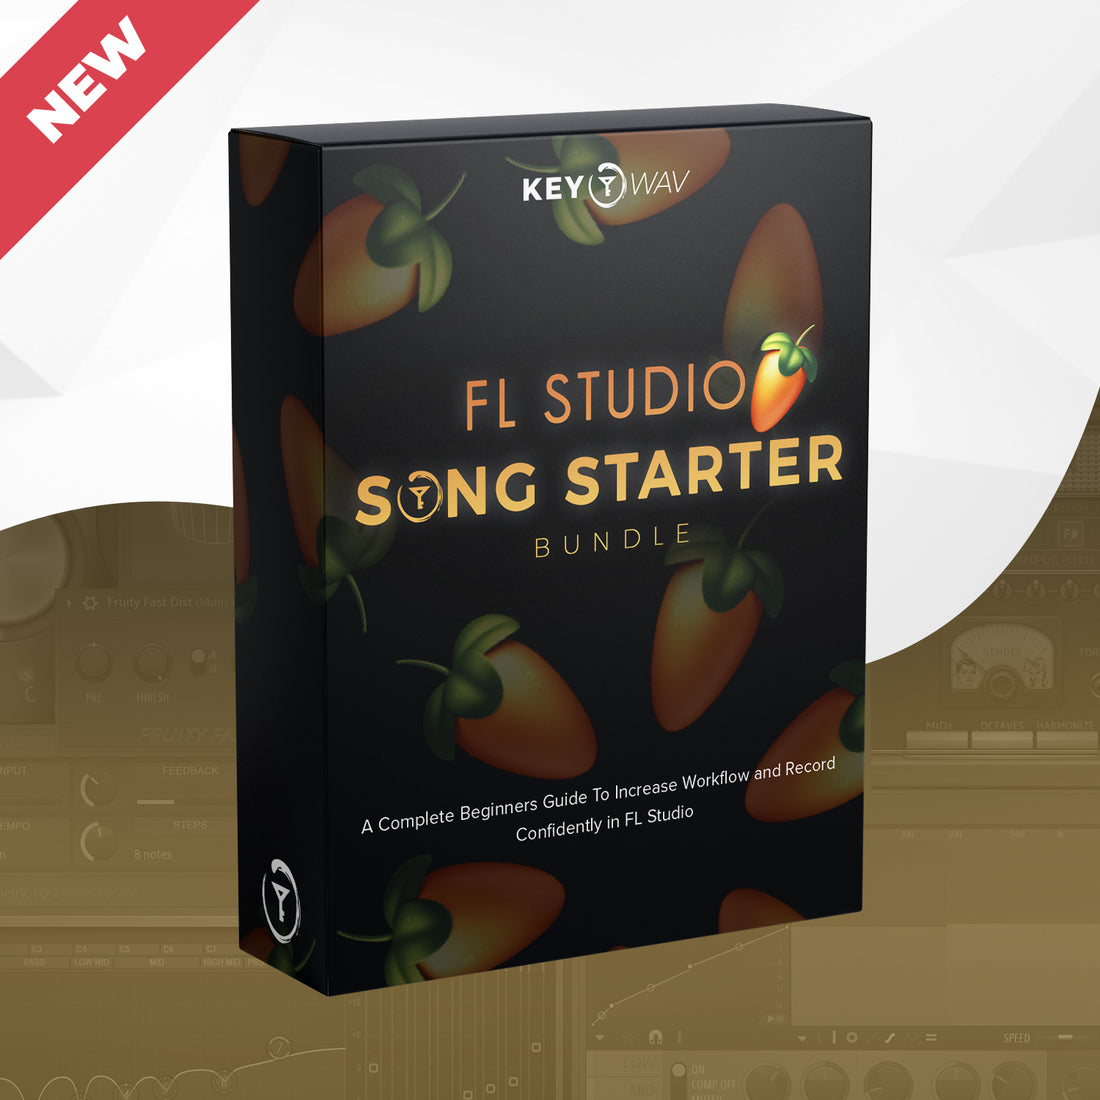 The FL Studio Song Starter BUNDLE